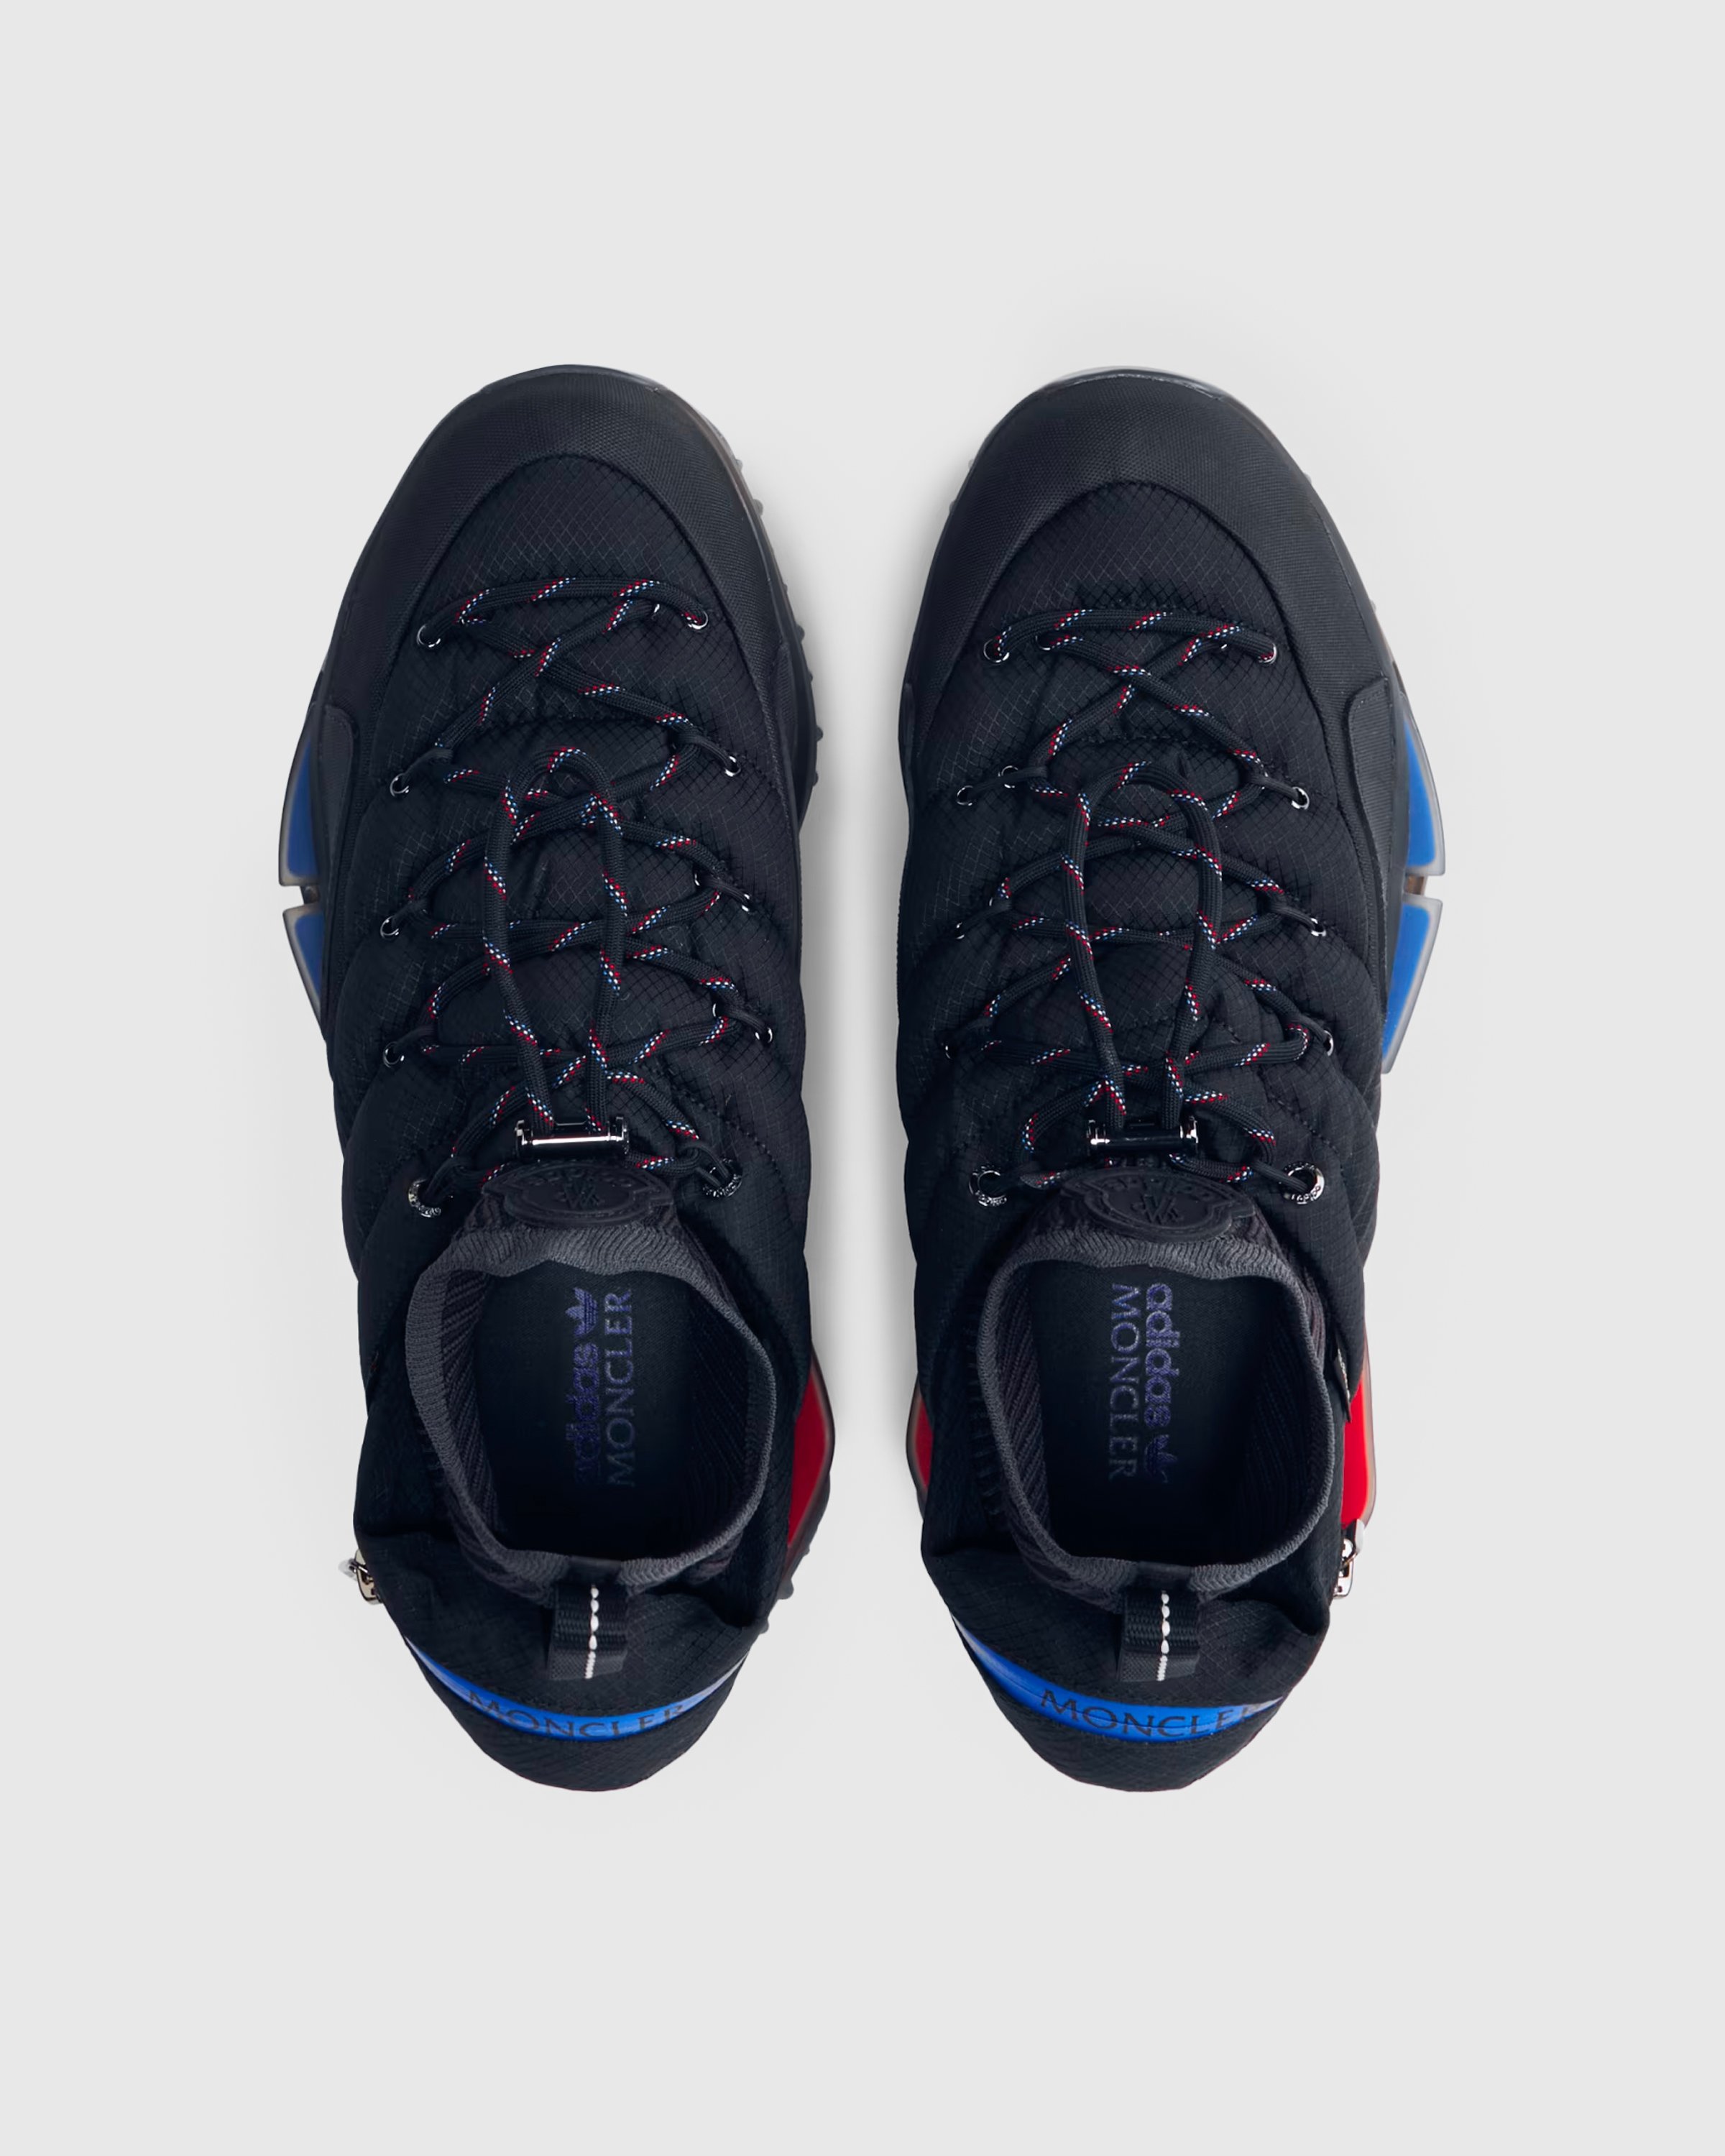 Moncler x adidas Originals - NMD Runner Shoes Core Black - Footwear - Black - Image 3